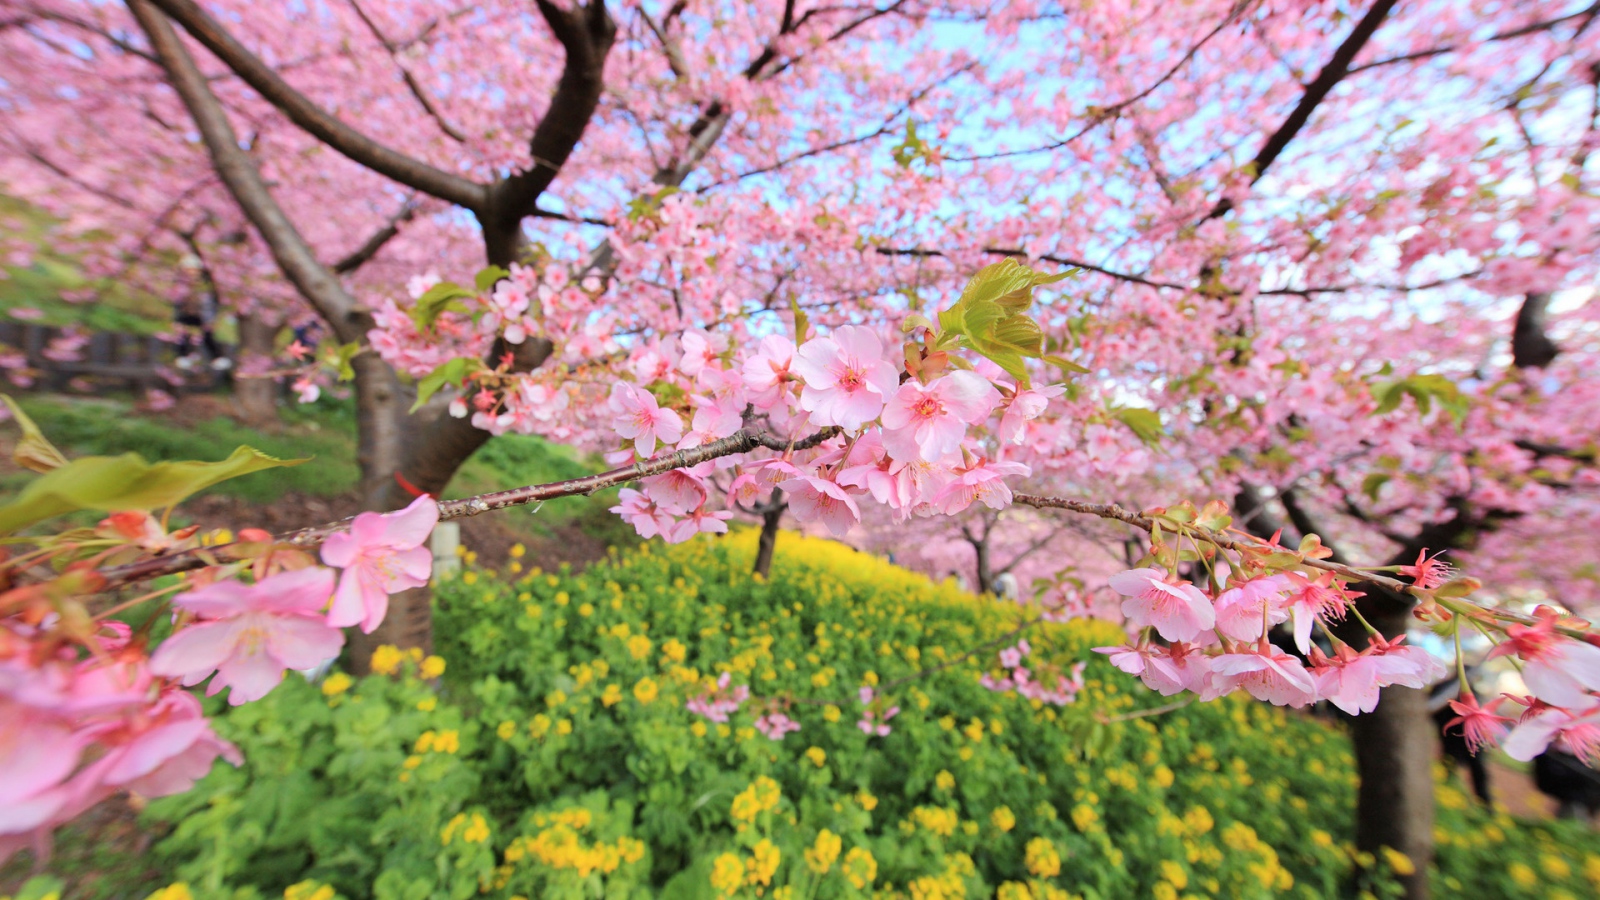 Download Wallpaper 1600x900 spring bloom tree flowers 1600x900 HD